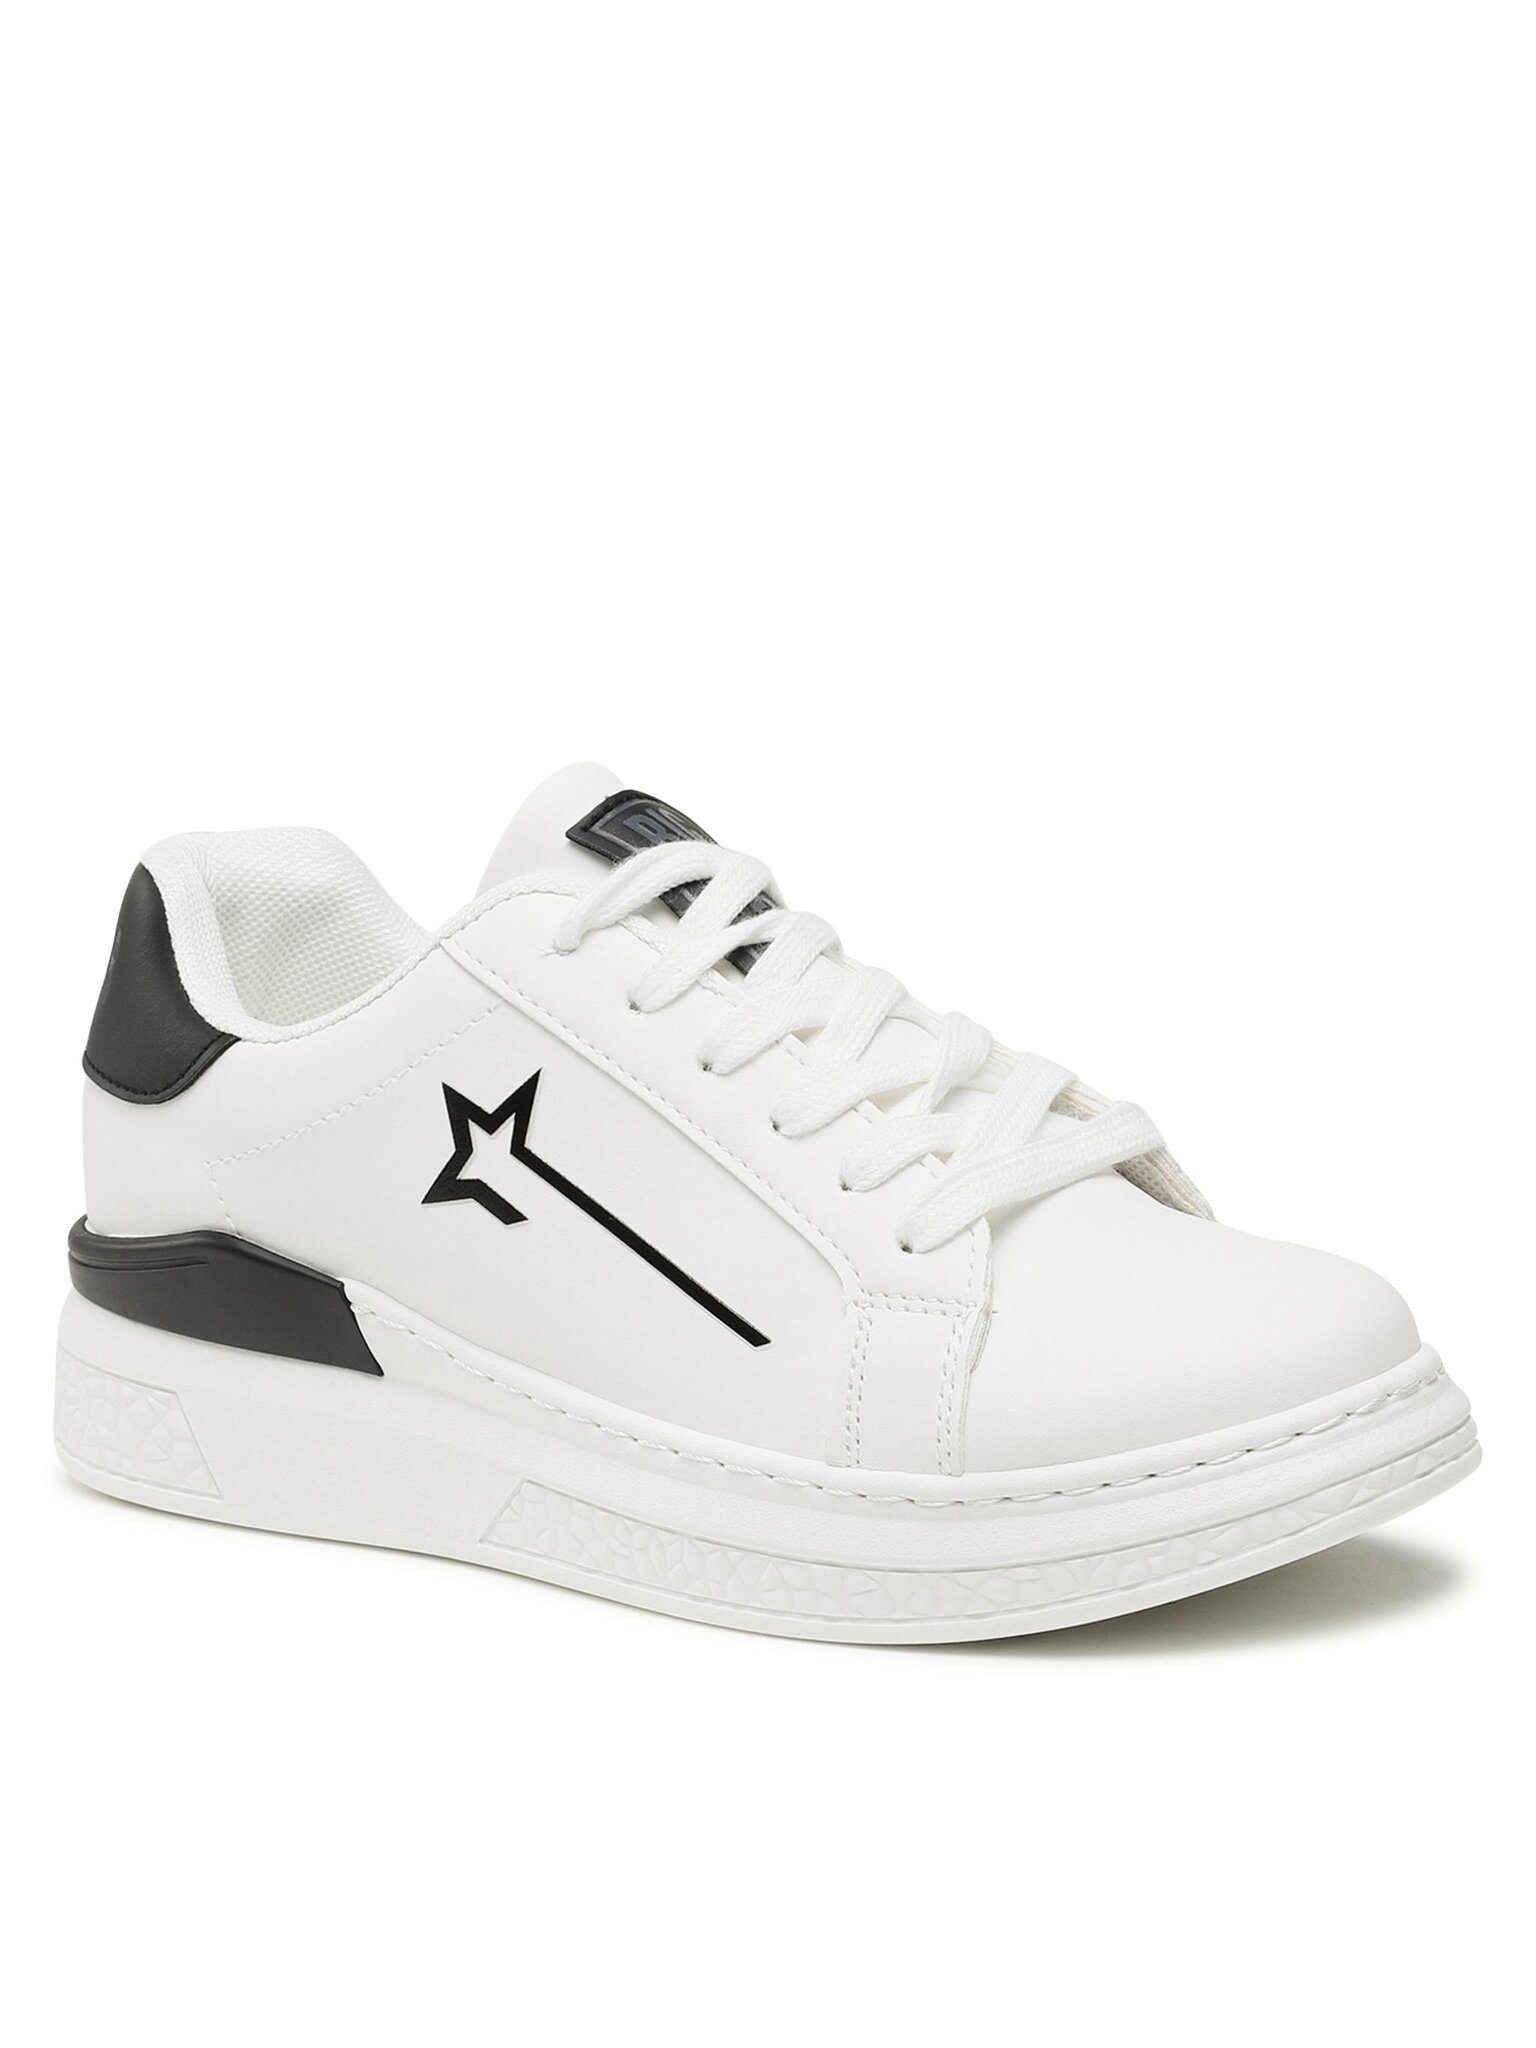 BIG STAR Sneakers MM274227 White/Black 101 Sneaker